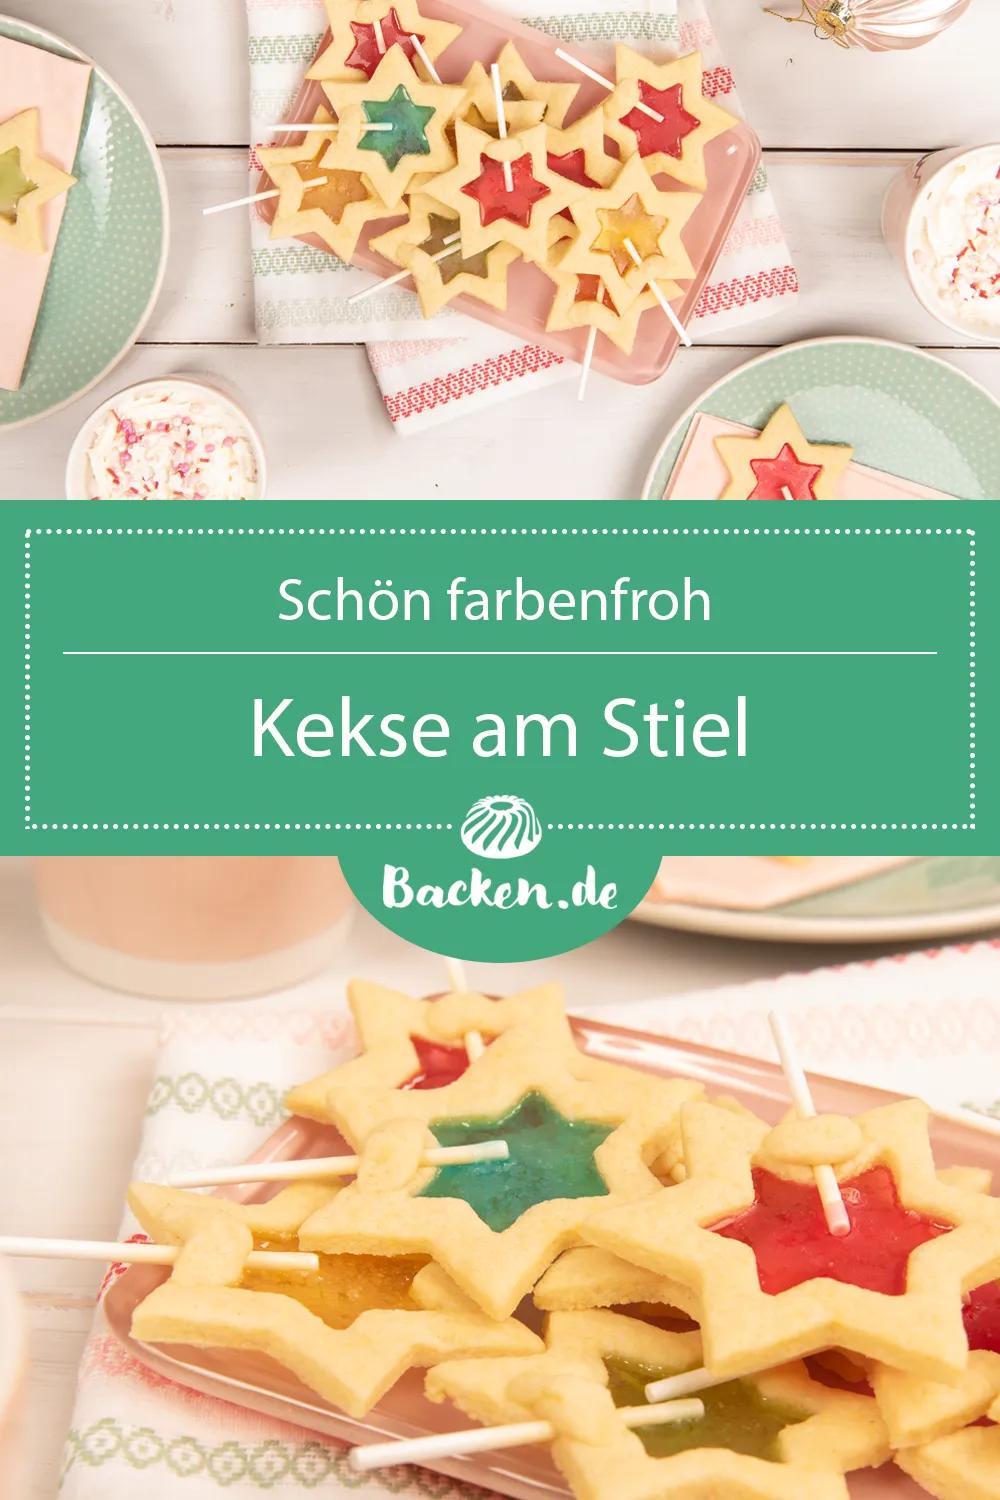 Kekse am Stiel - Rezept von Backen.de | Rezept | Kekse, Plätzchen ...